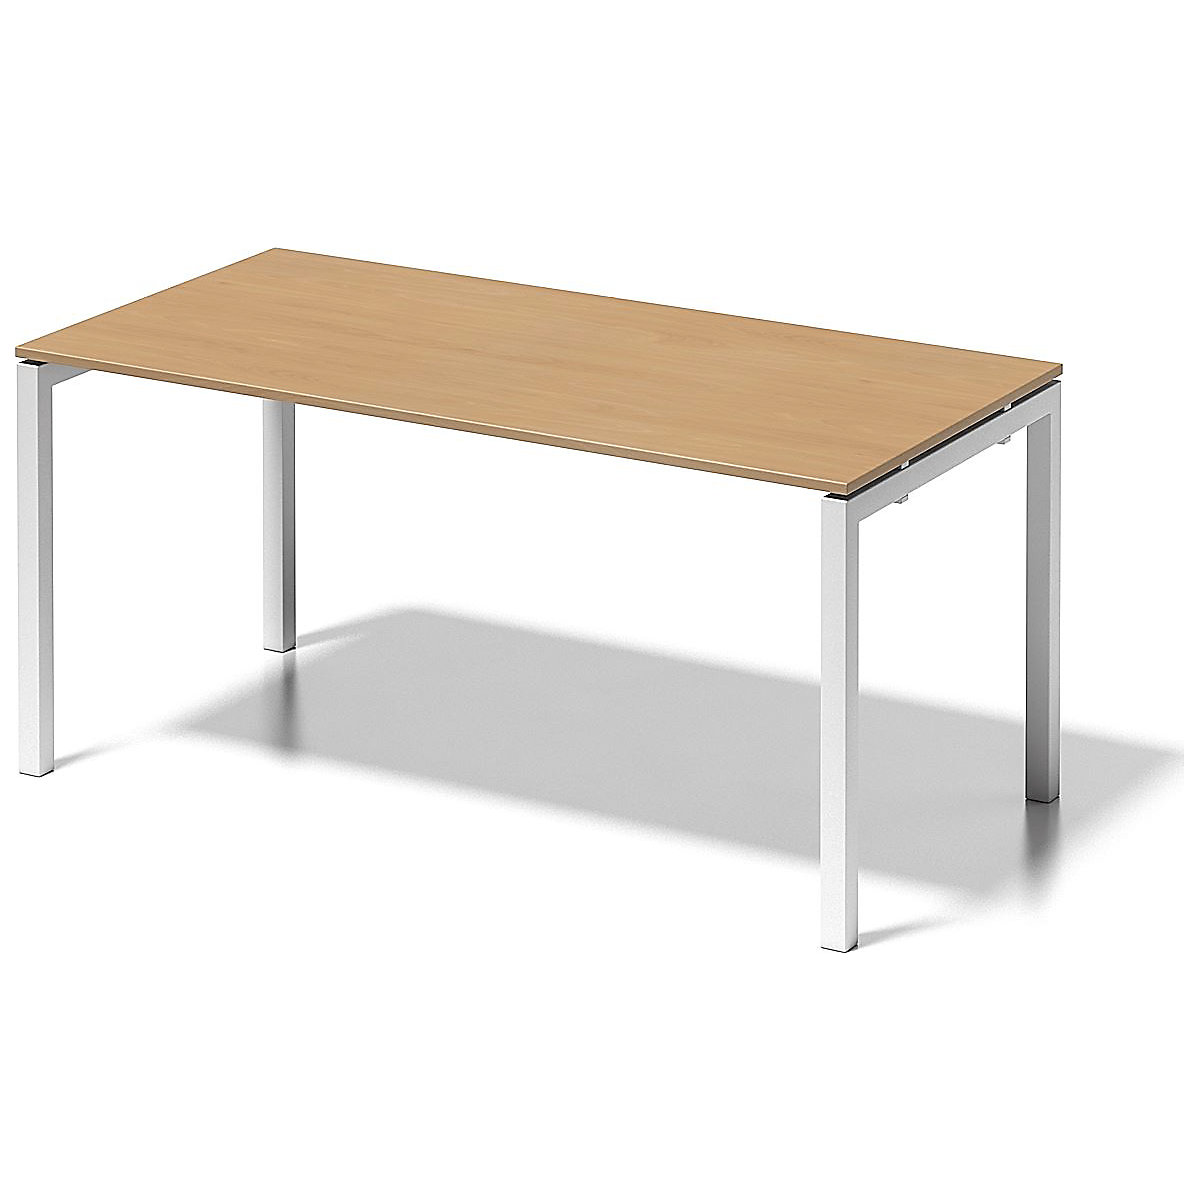 CITO desk, U-frame – BISLEY, HxWxD 740 x 1600 x 800 mm, white frame, beech tabletop-5